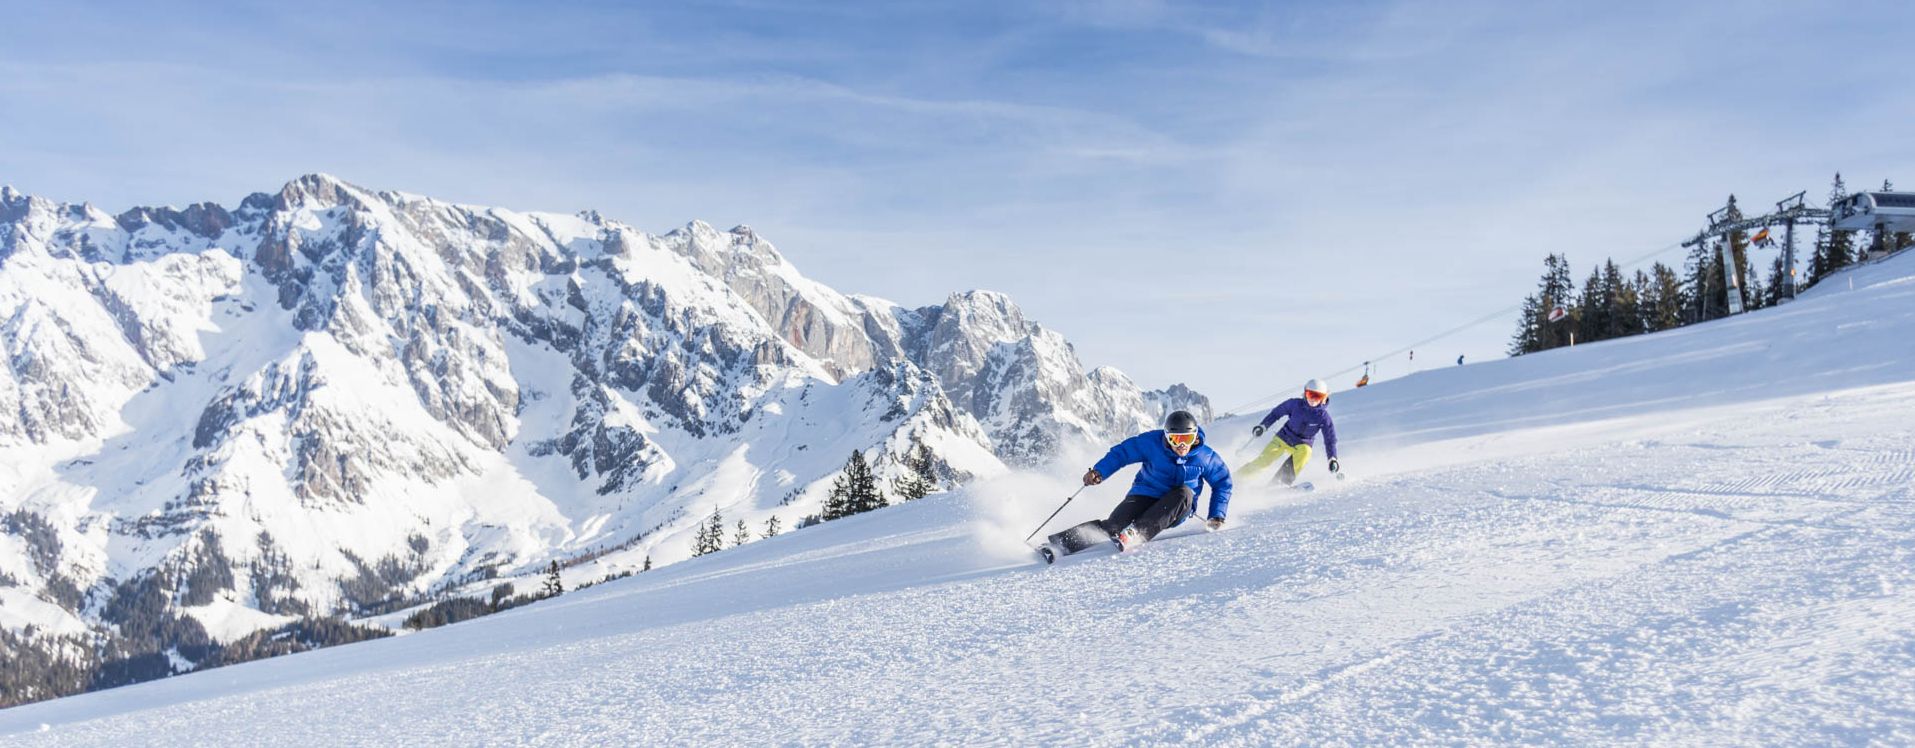 Learn to ski in the Hochkönig ski area